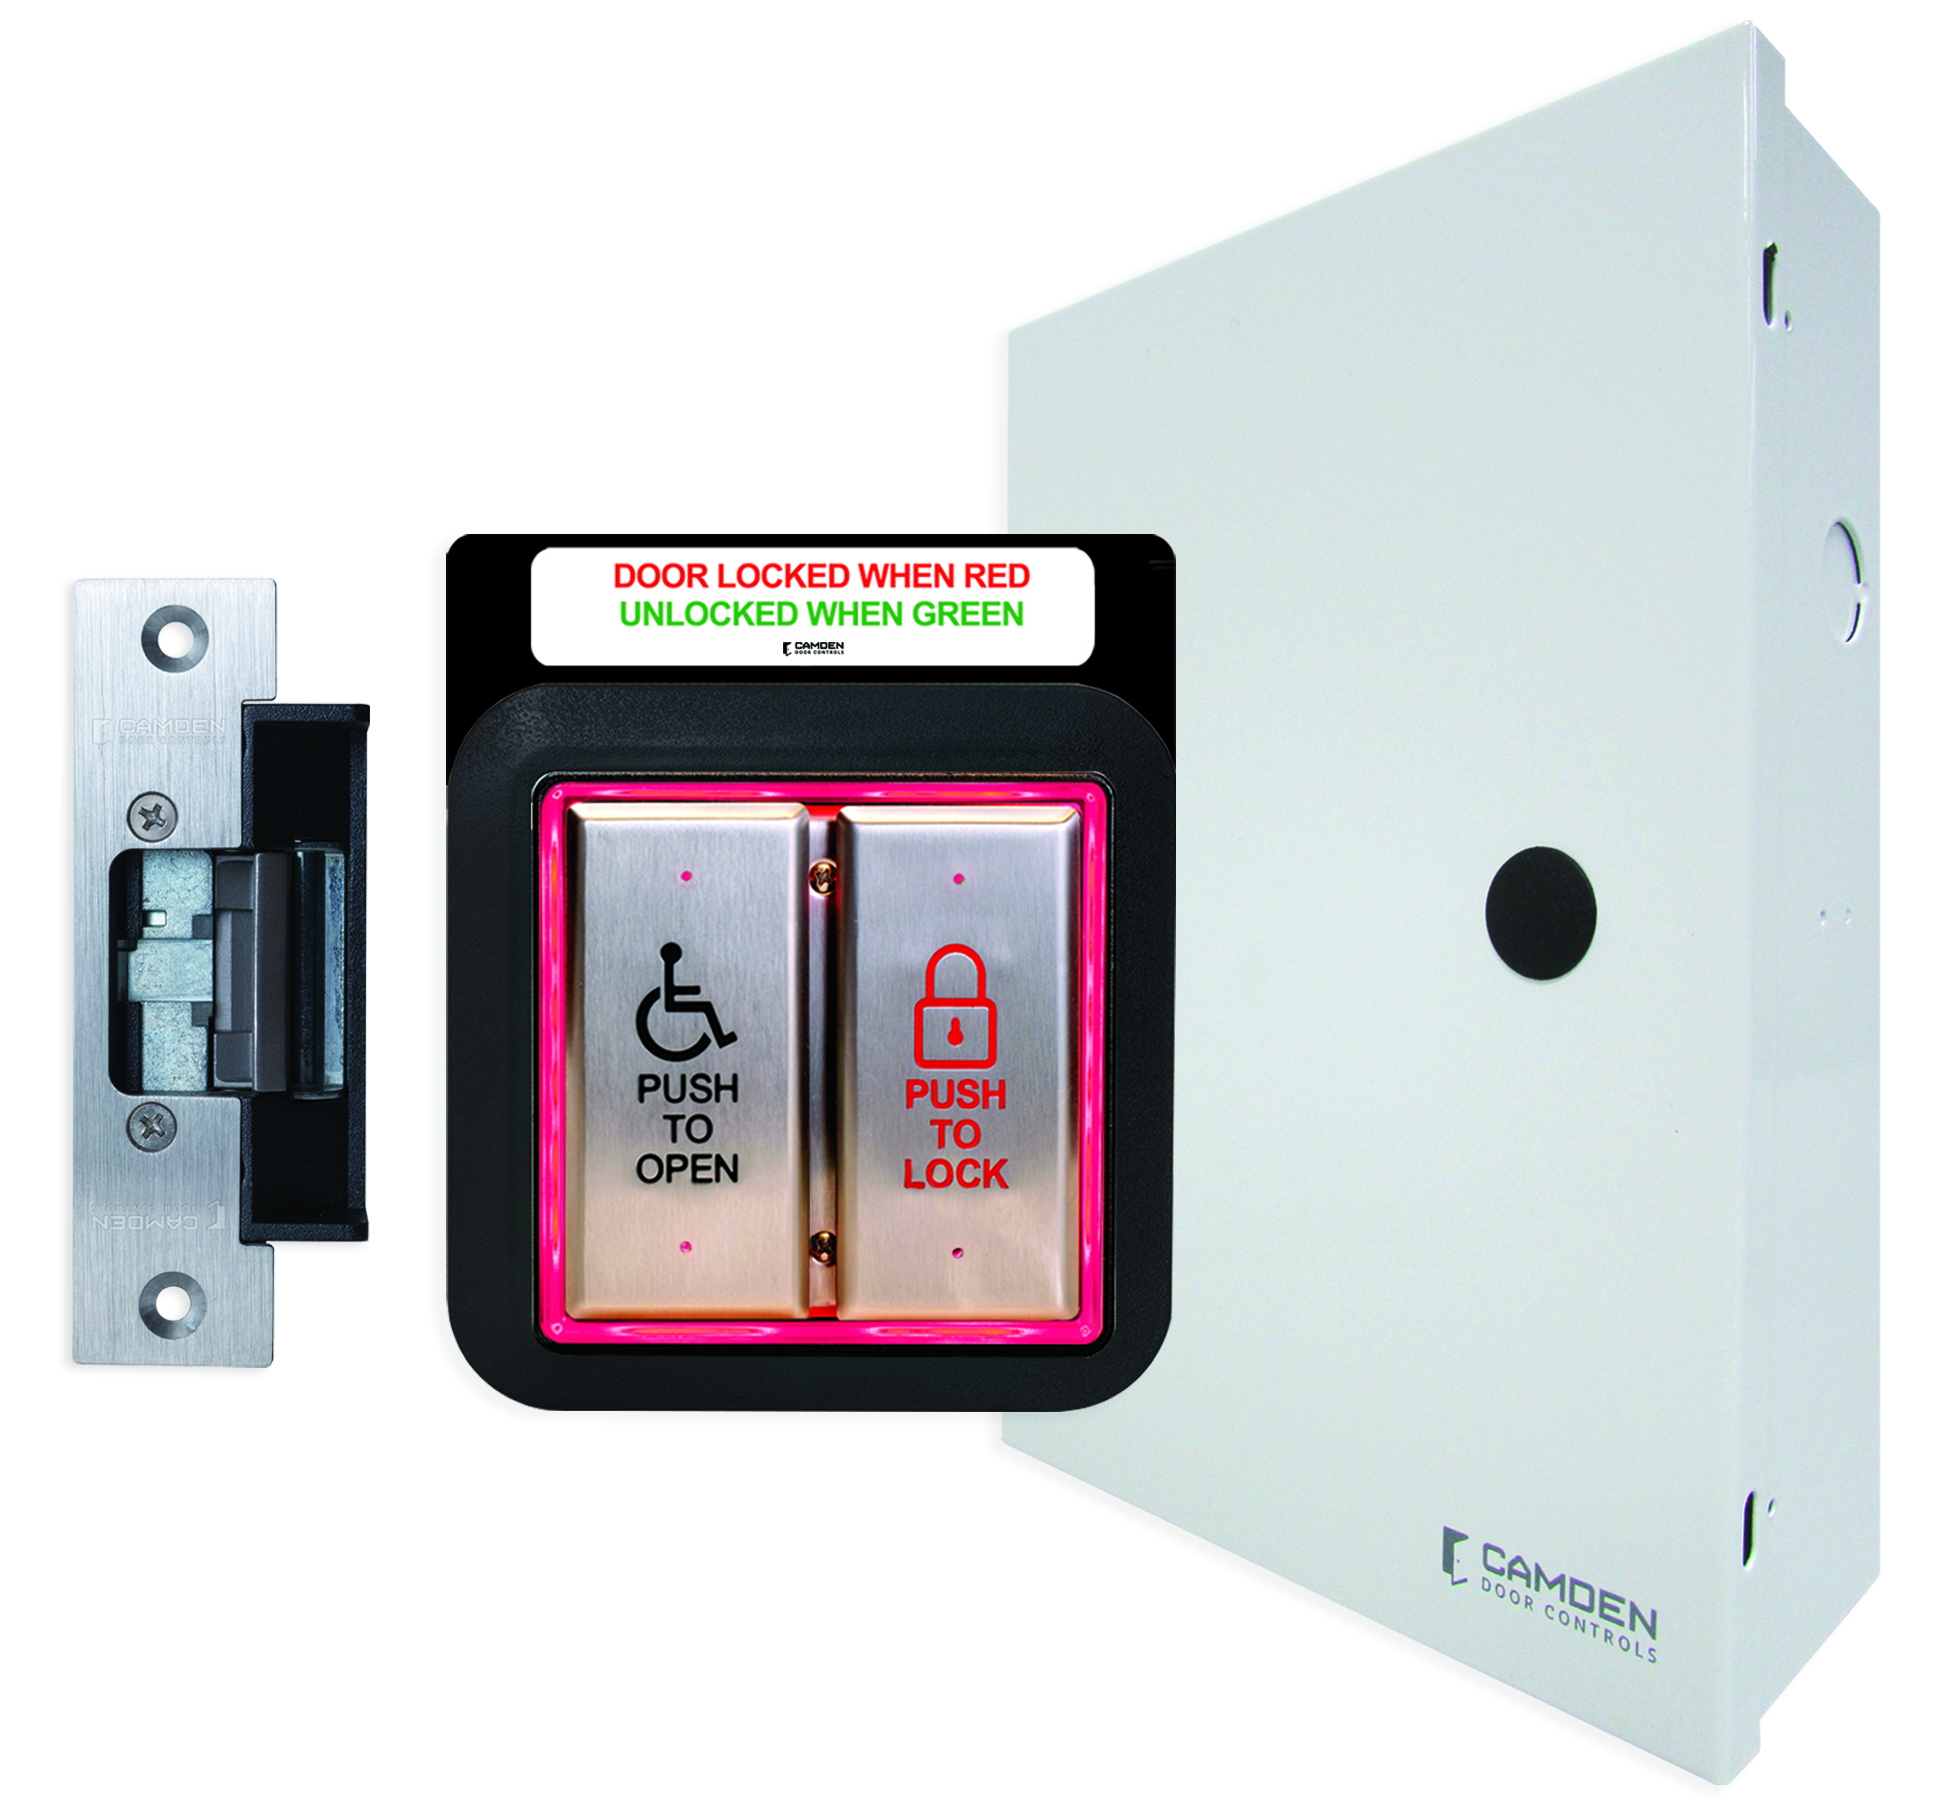 CM-300/310 Series: Interruptor rectangular iluminado LED - Botones Push/Exit - activación